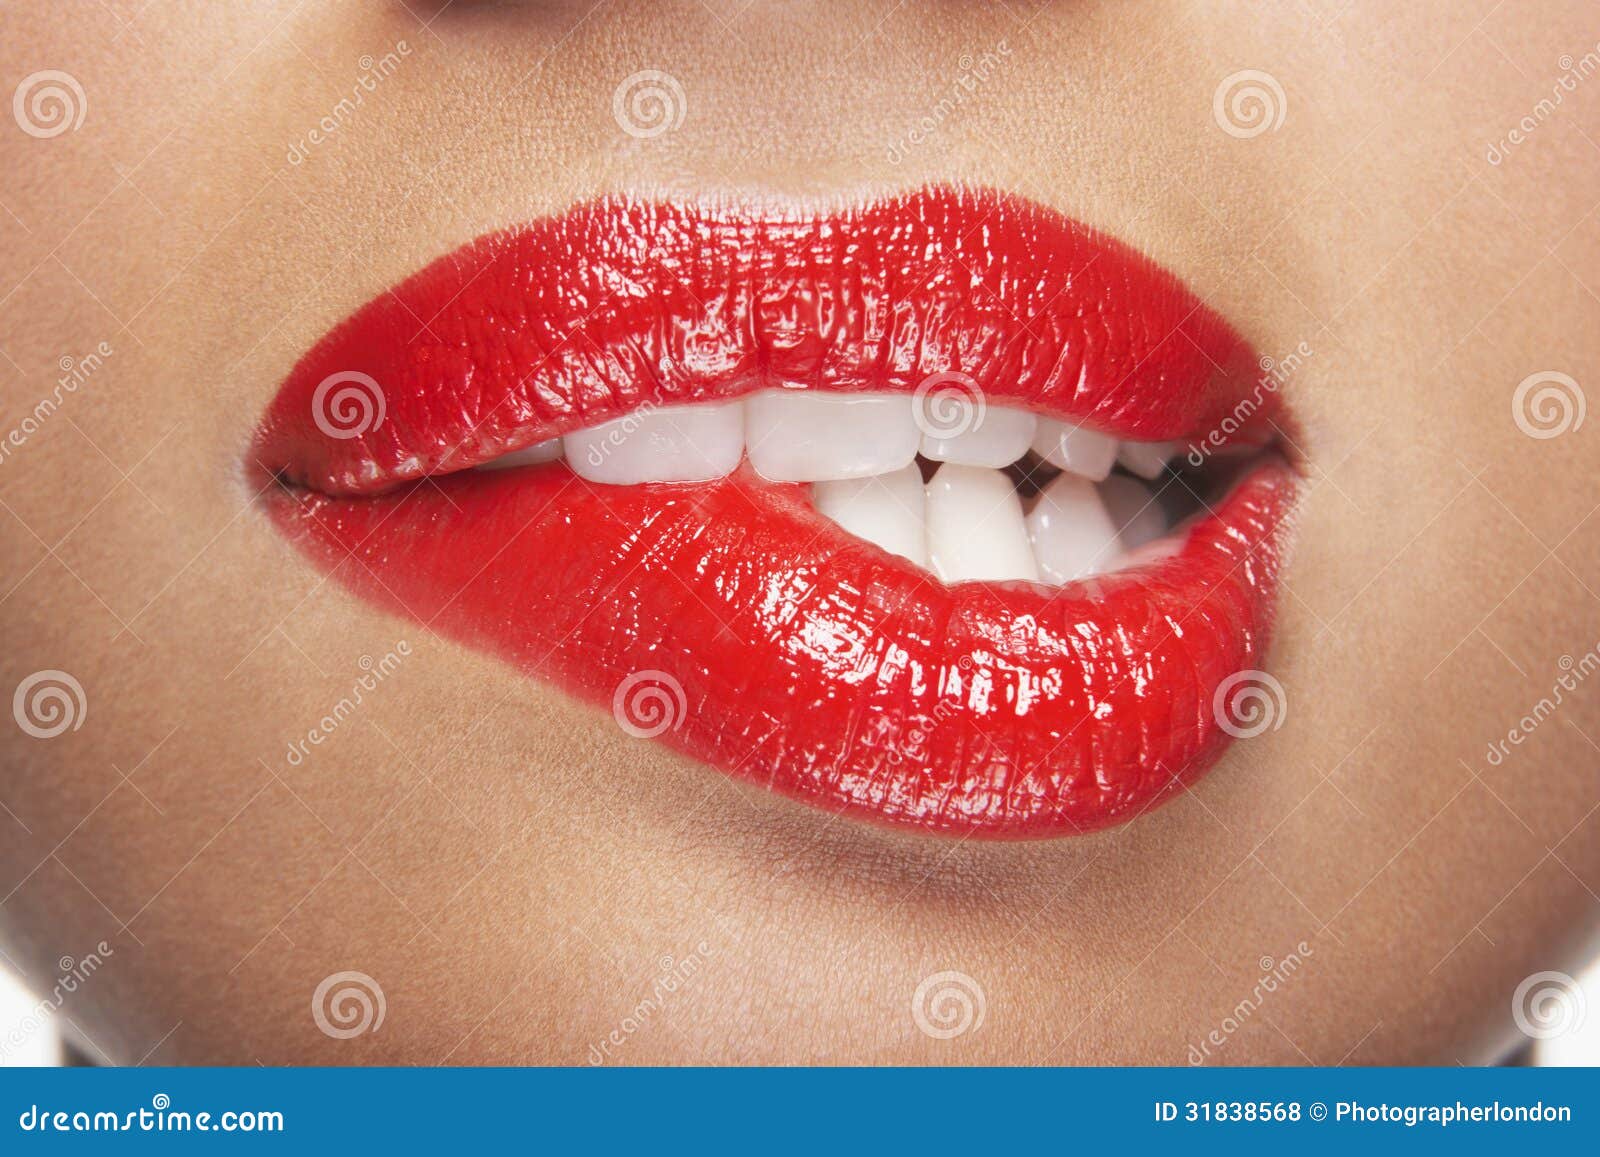 woman biting red lips